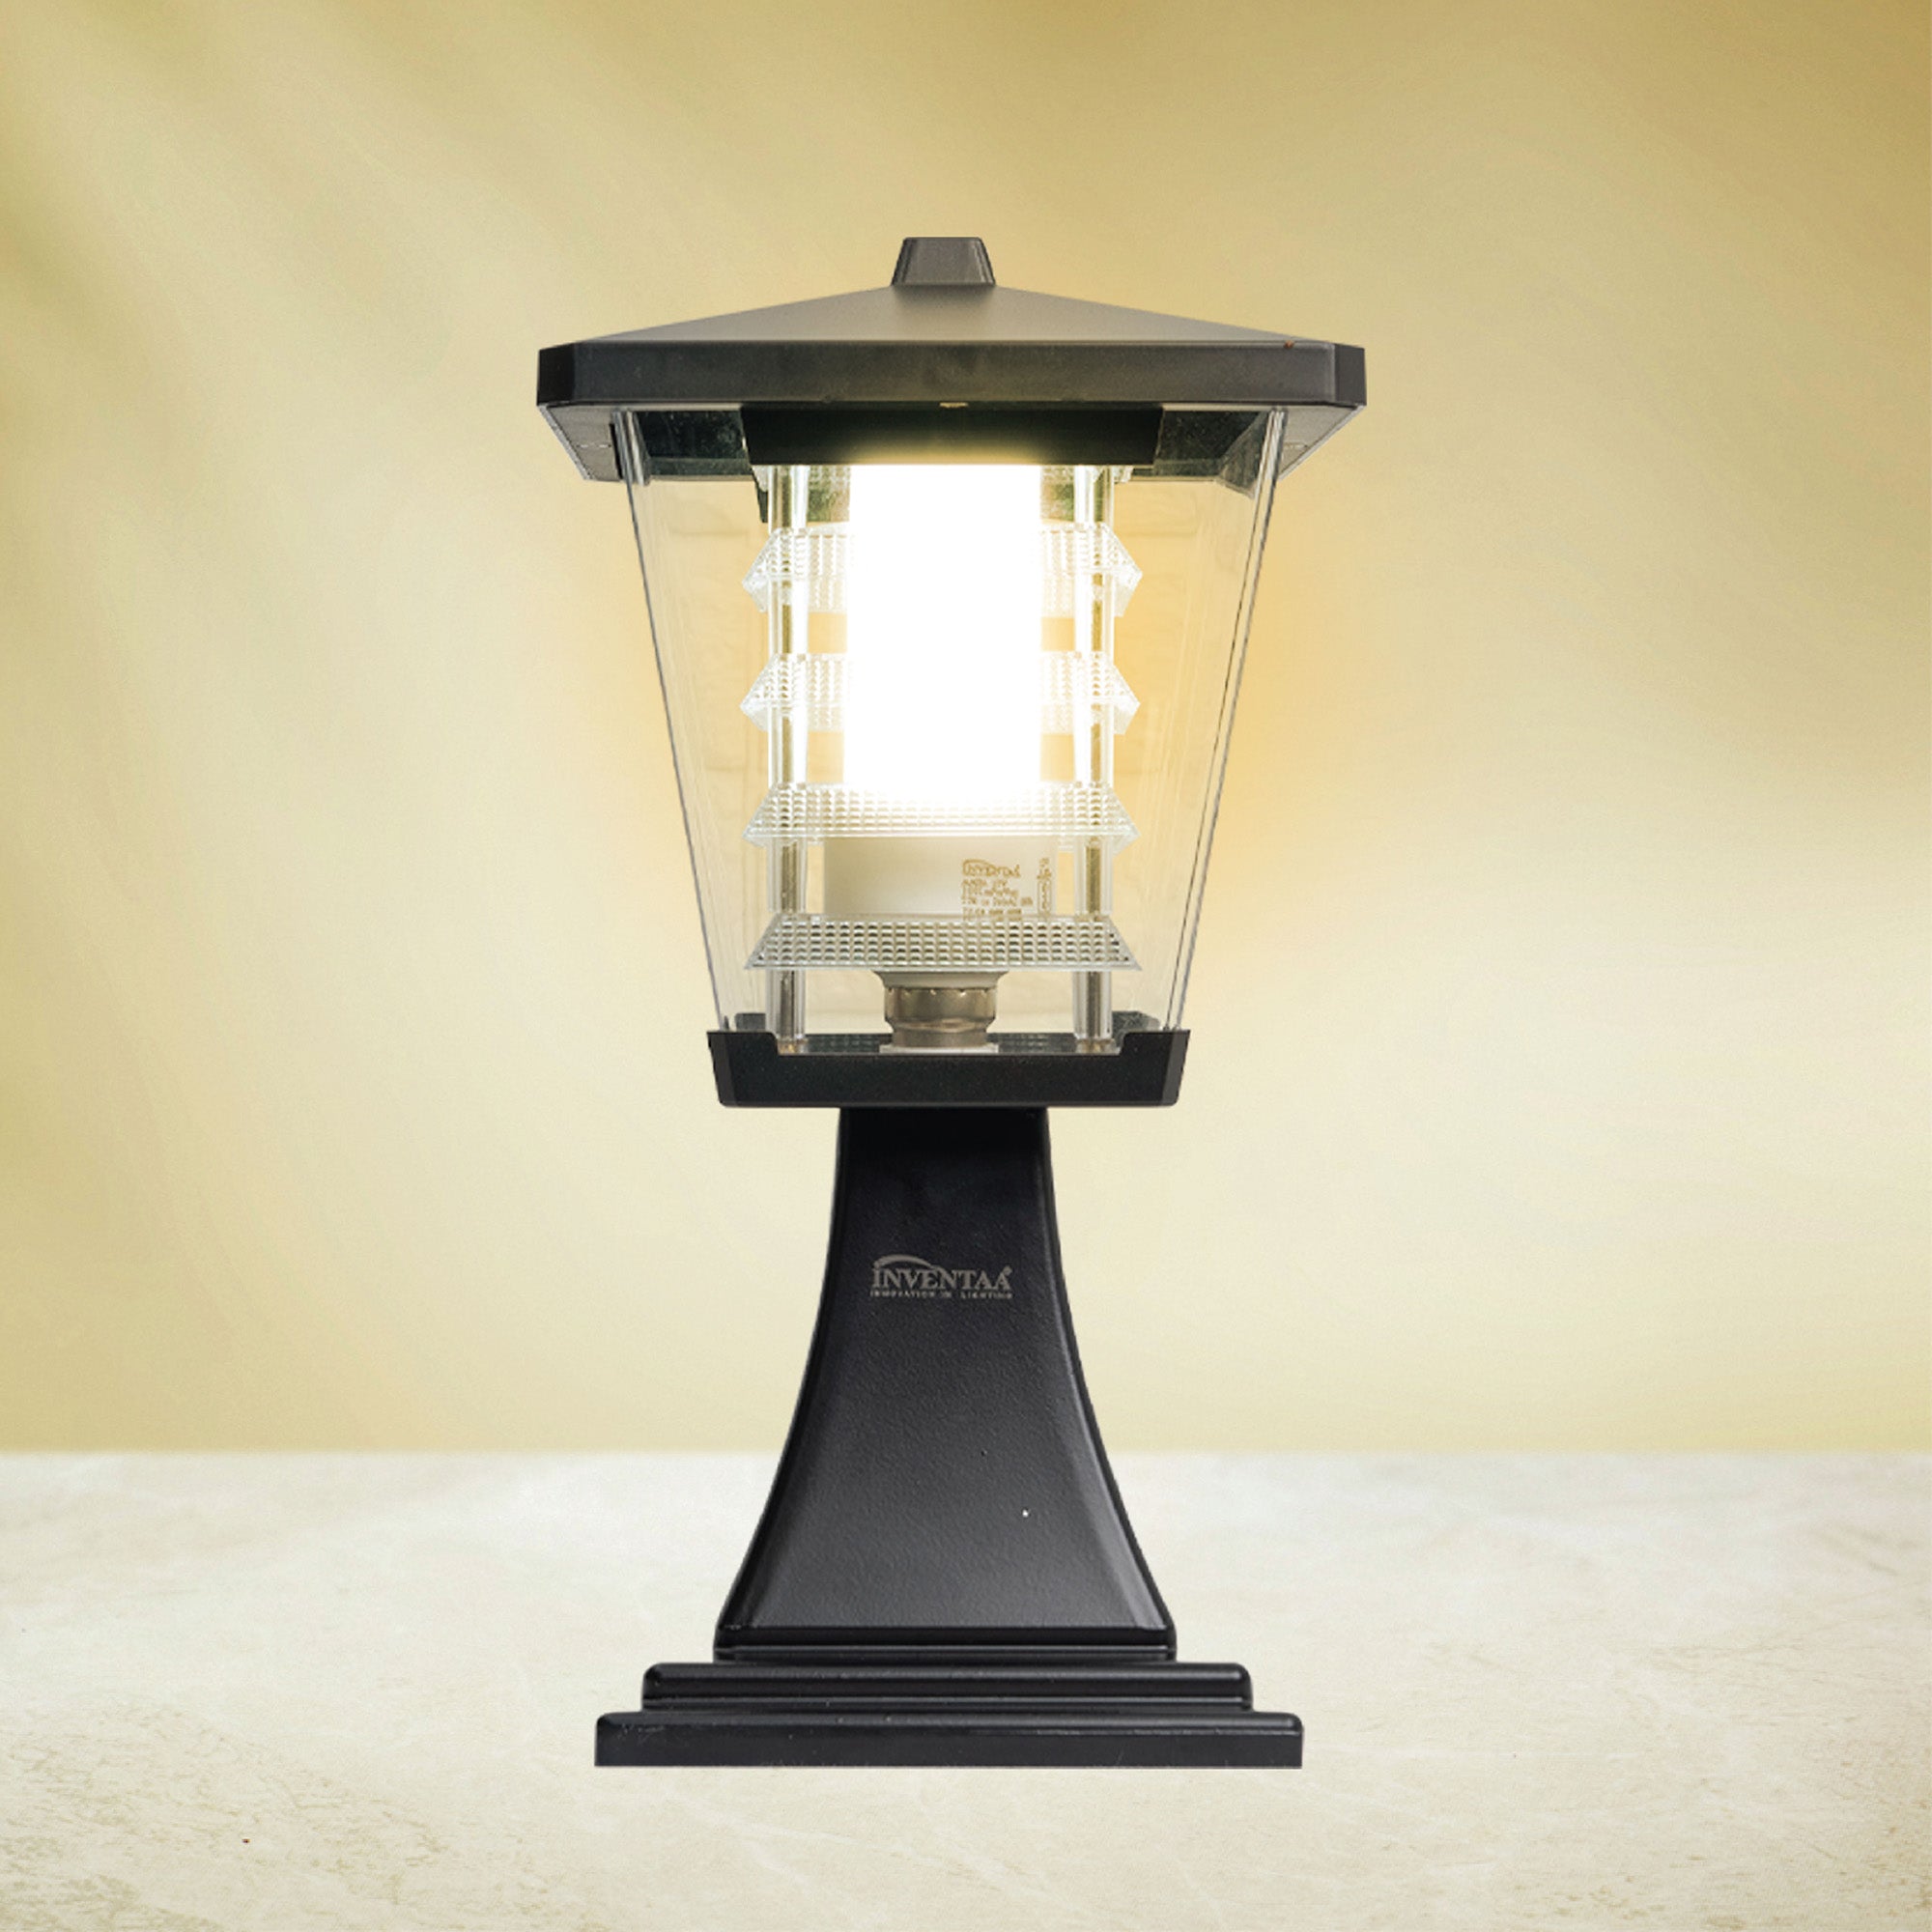 Mini glasis led gate light emitting warm white glow #bulb options_warm